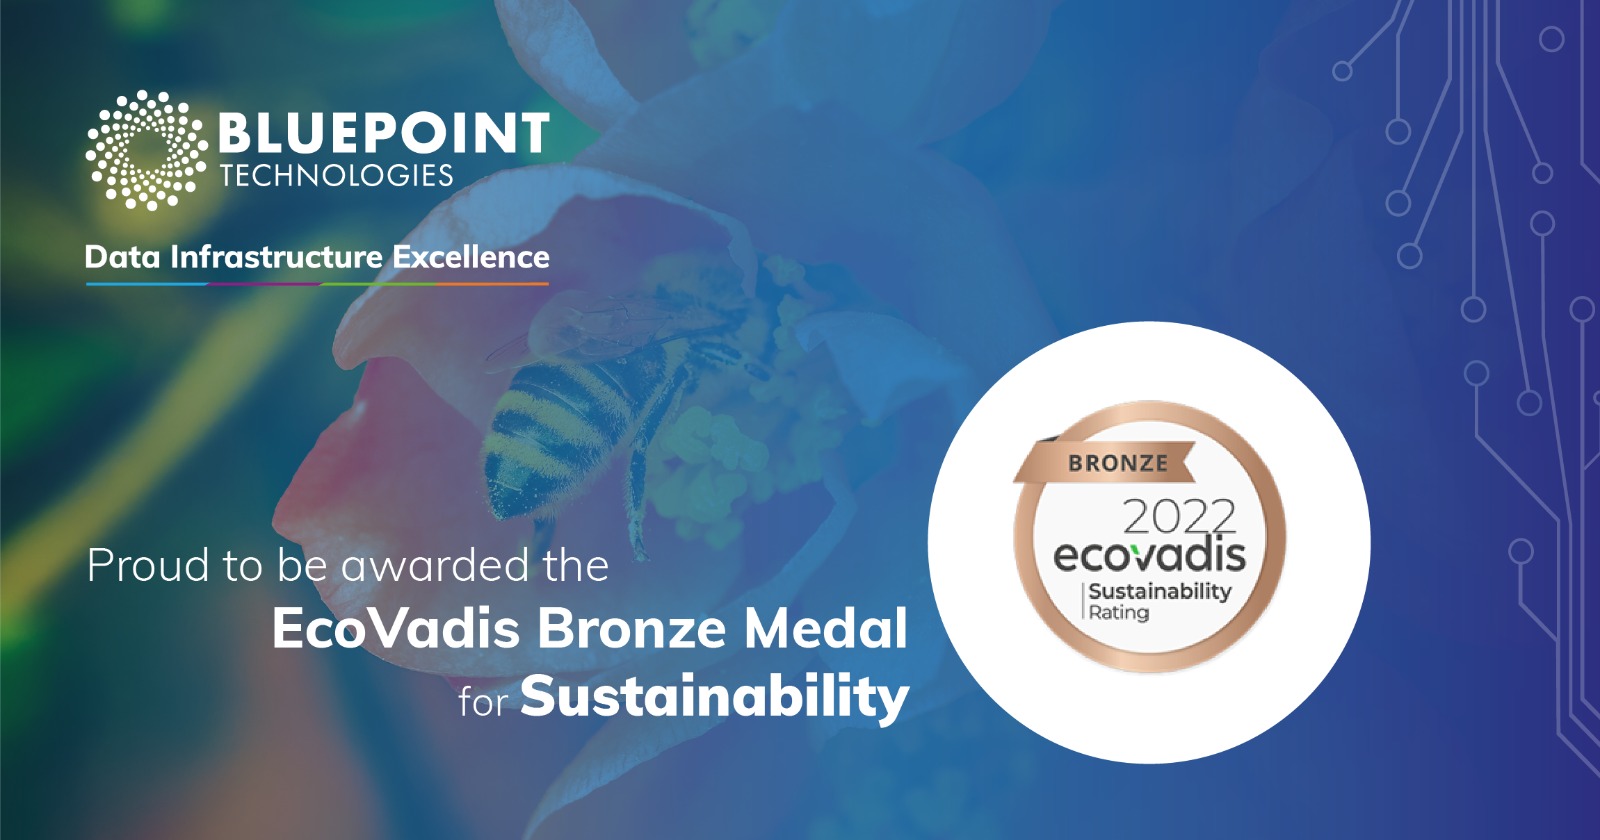 Bluepoint Awarded BronzeEcoVadis Rating